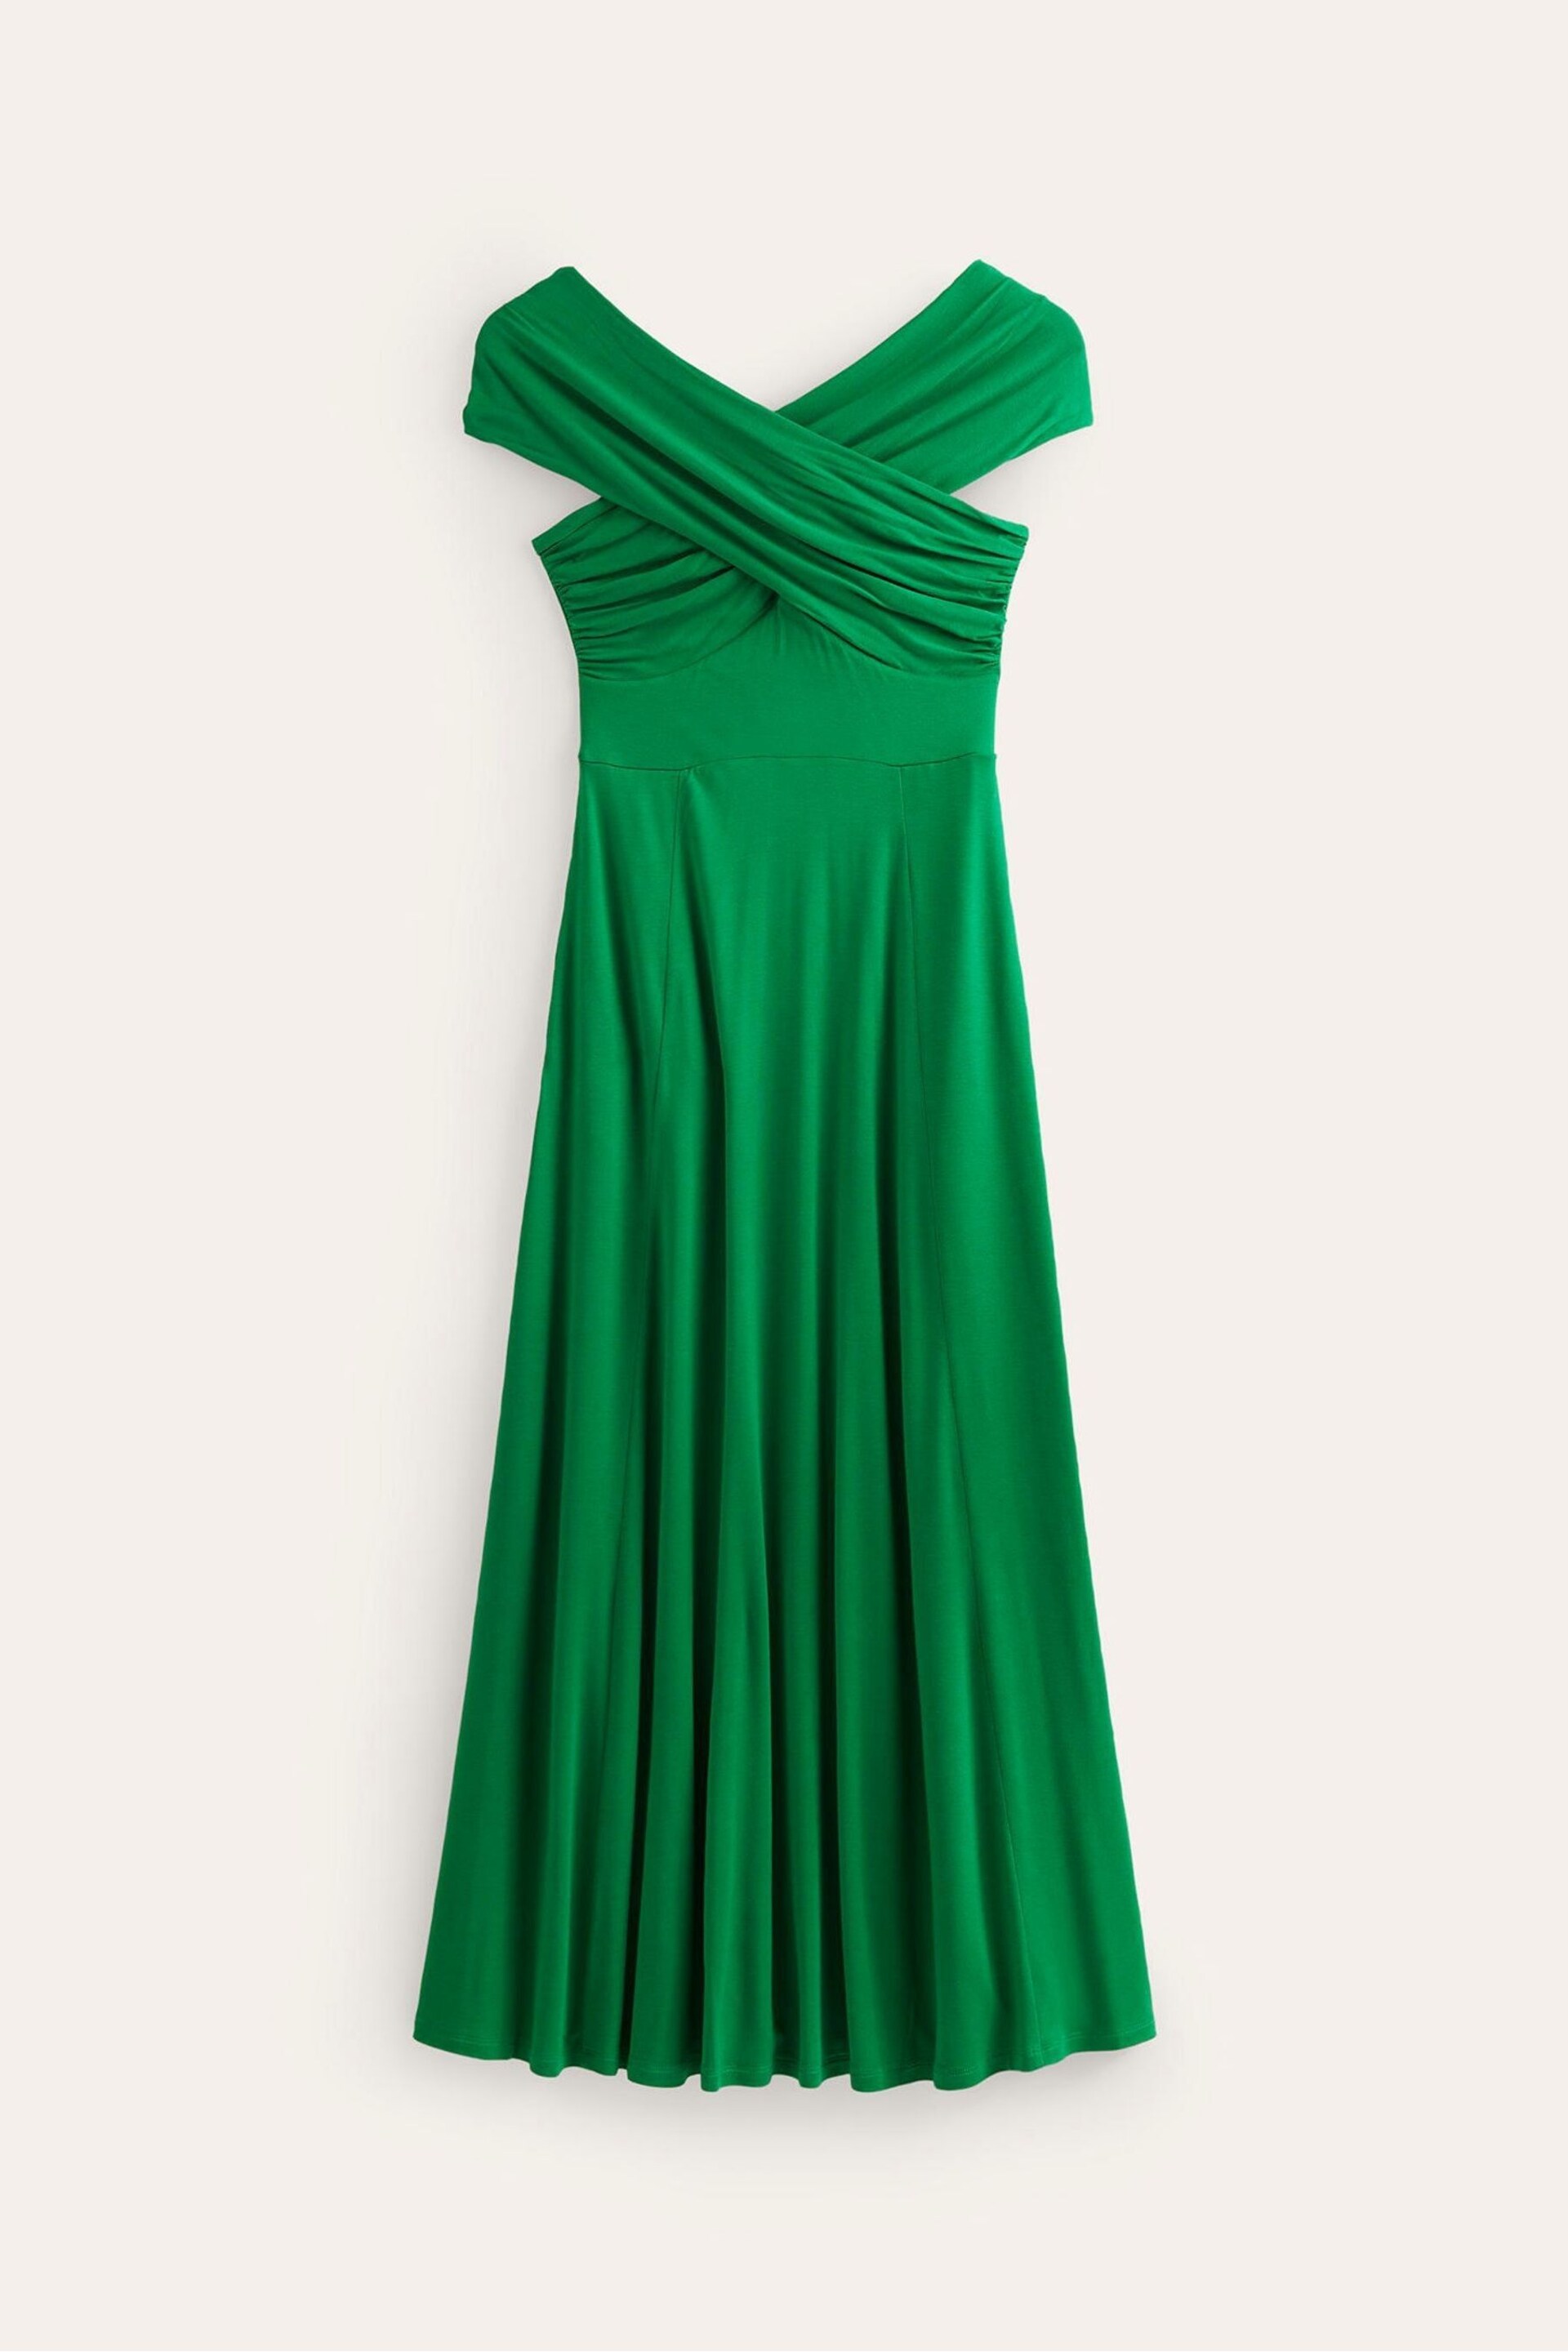 Boden Green Petite Bardot Jersey Maxi Dress - Image 5 of 5